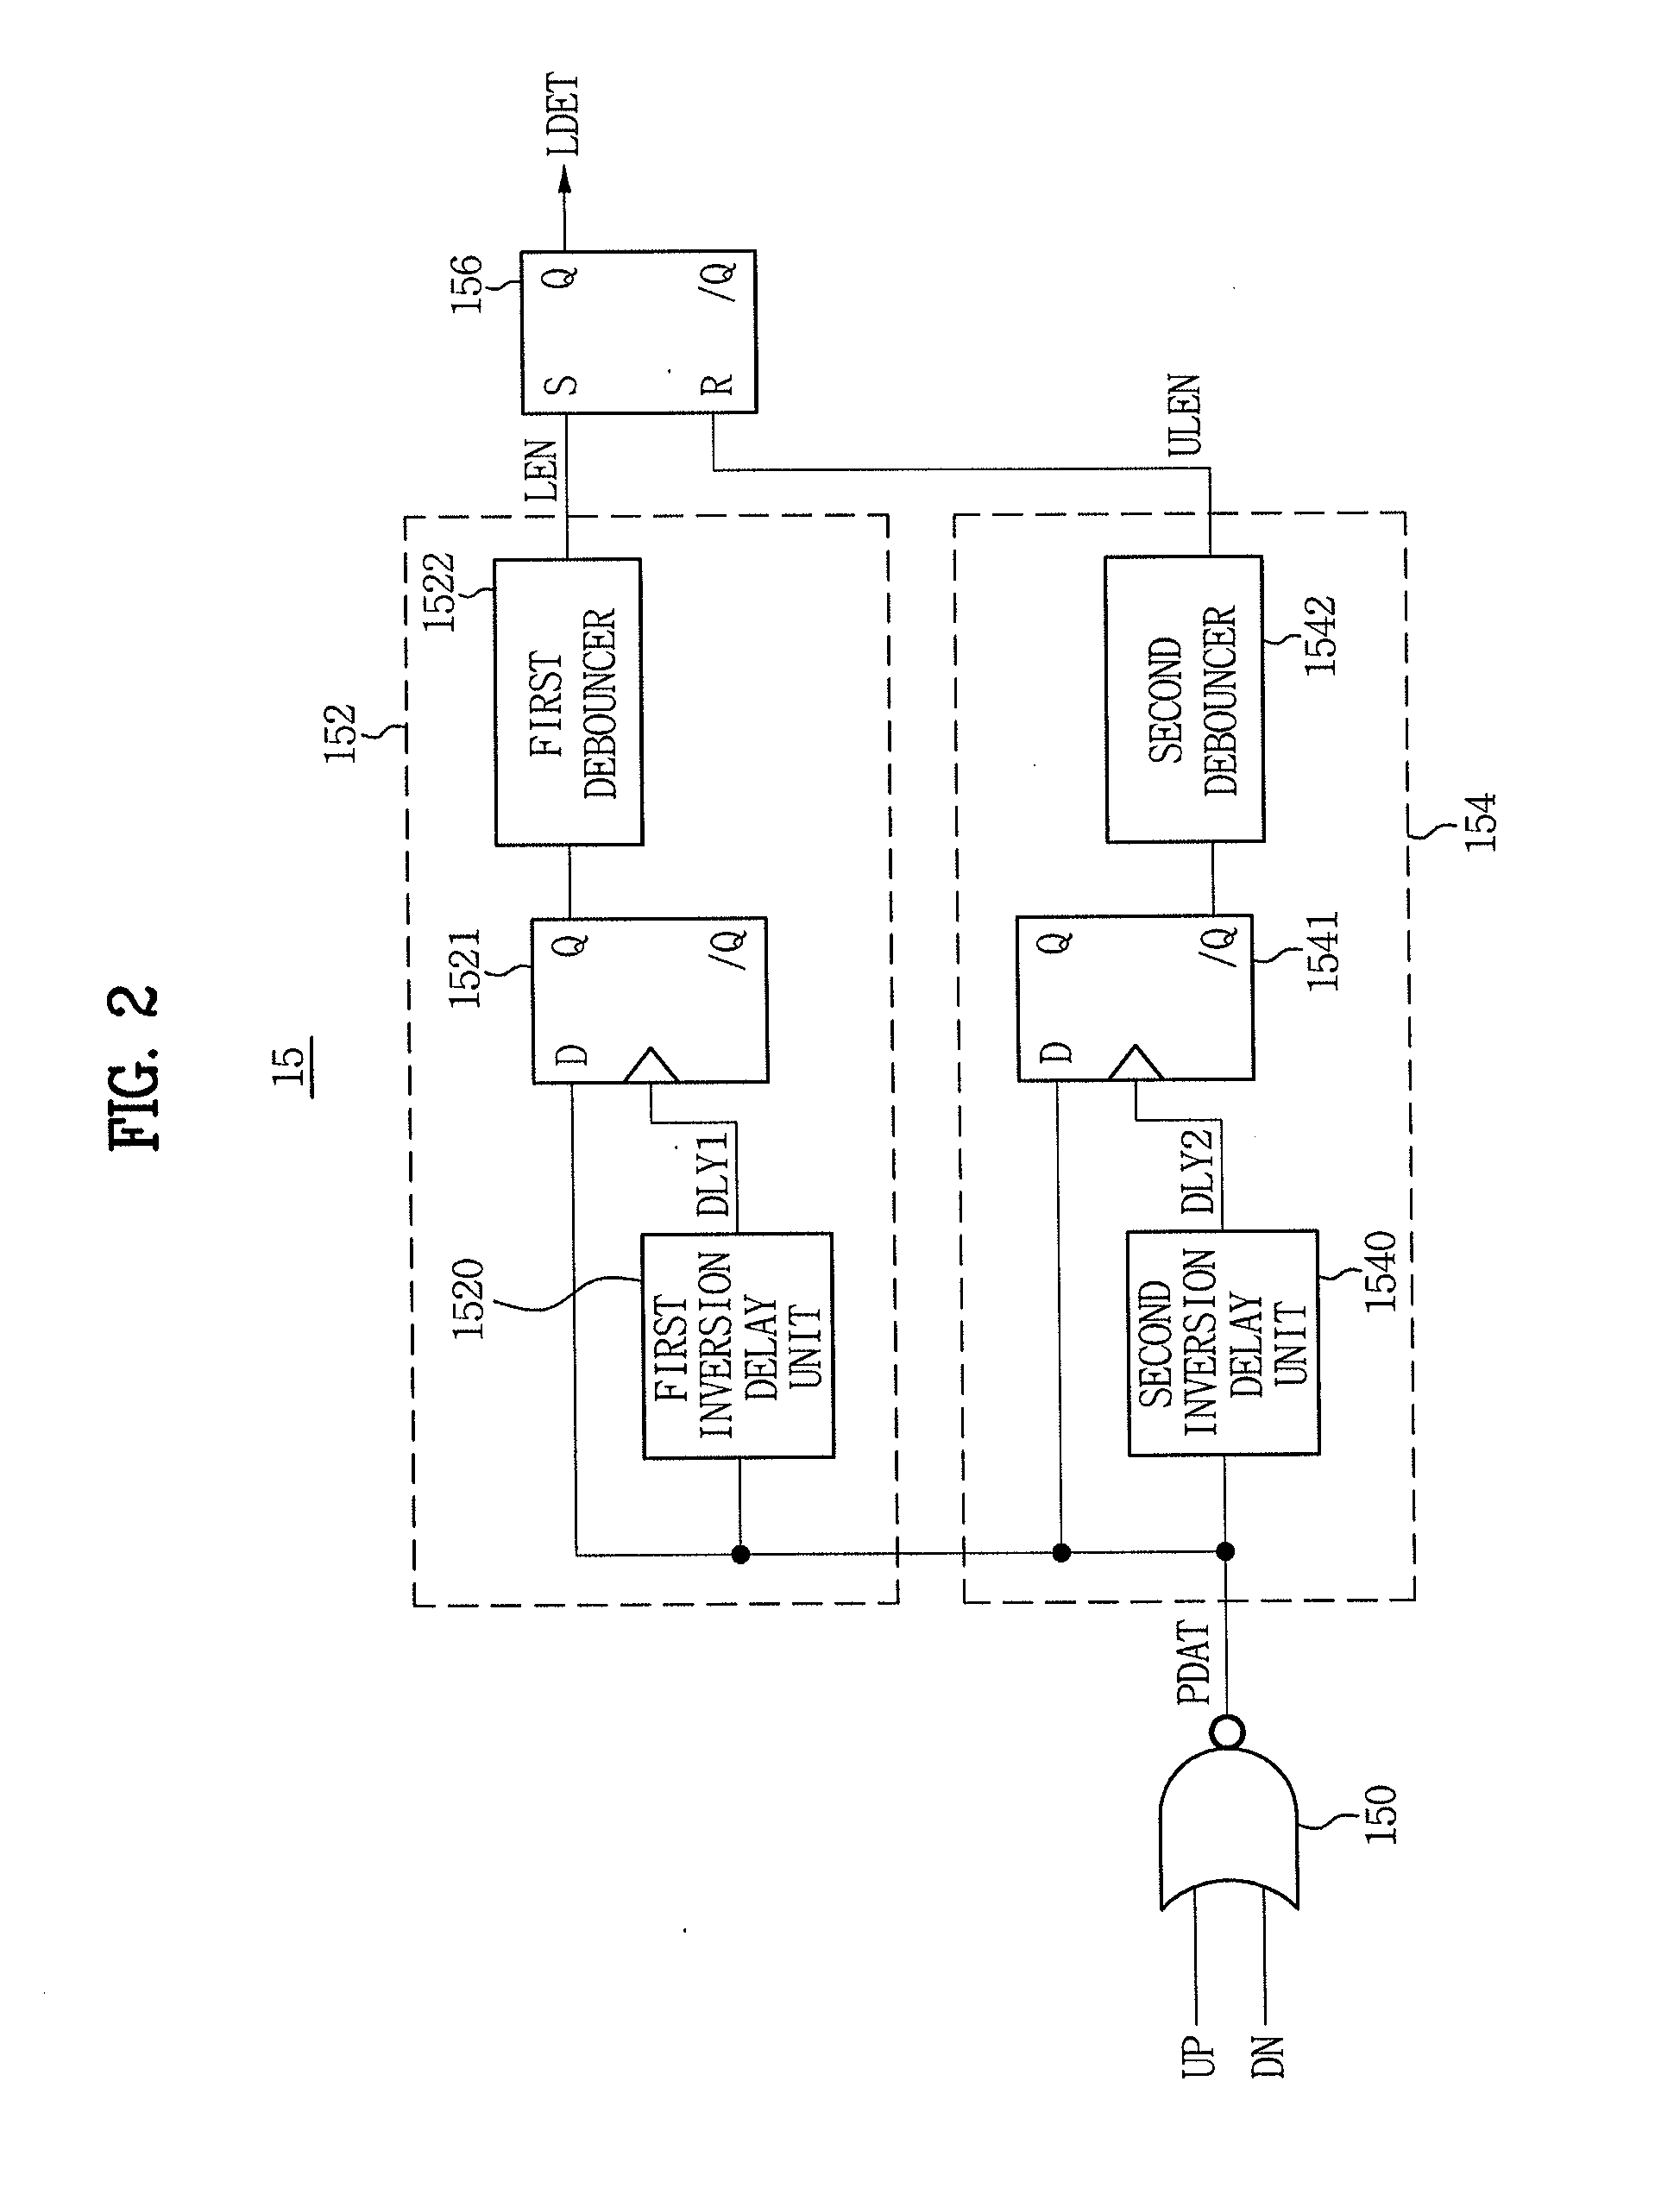 Phase locked loop circuit, method of detecting lock, and system having the circuit